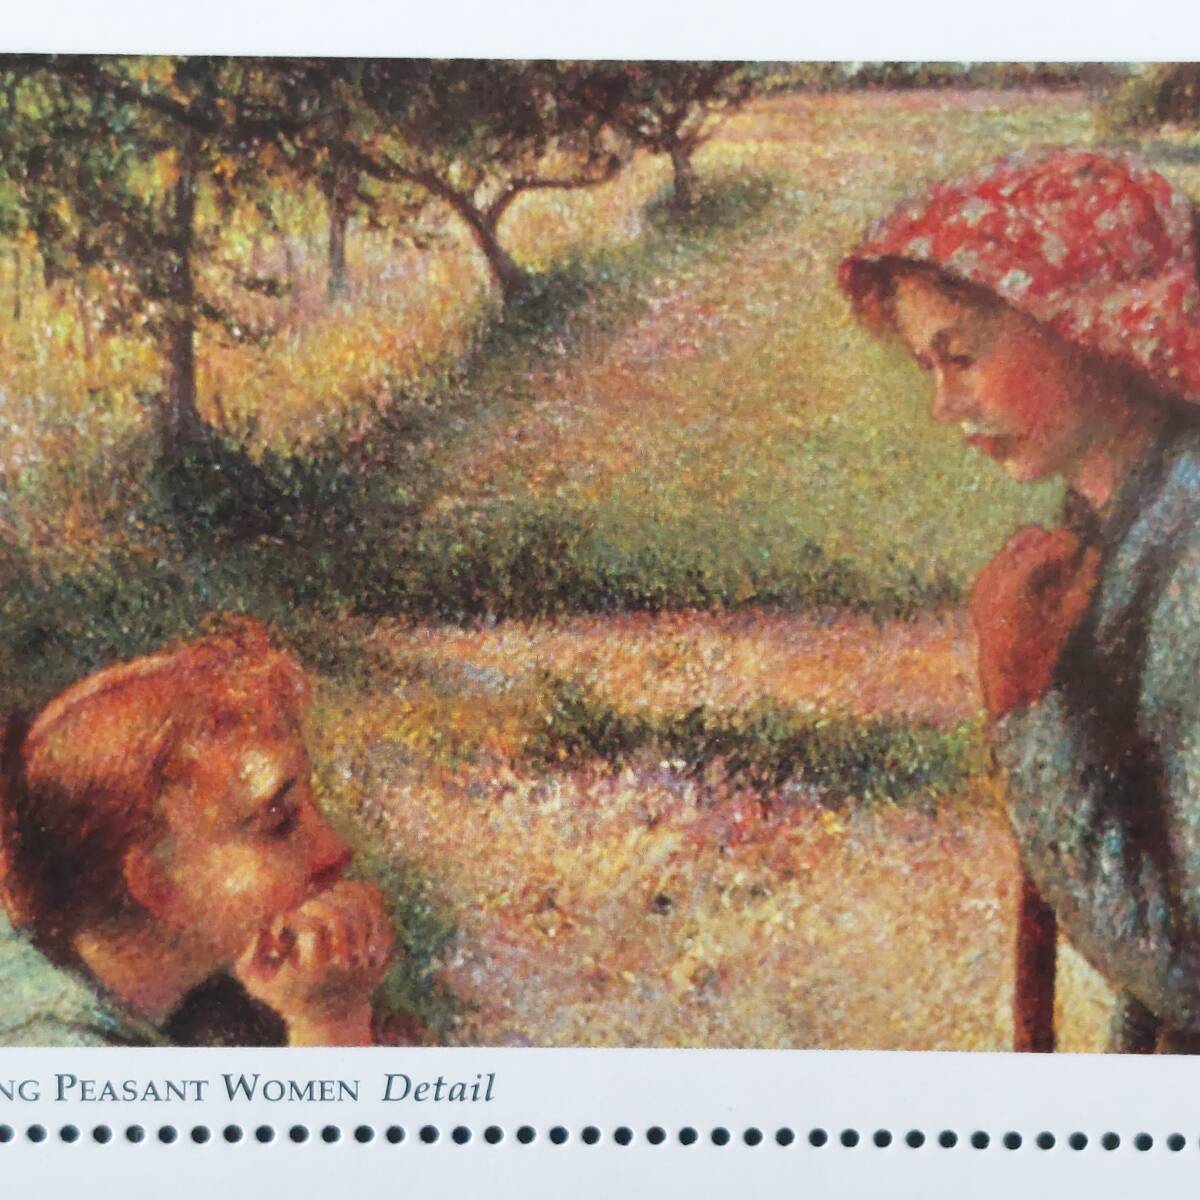 J170 セントビンセント&グレナディーン諸島切手「カミーユ・ピサロ作『二人の若い農民の女性』の切手小型シート」1996年発行 未使用の画像3